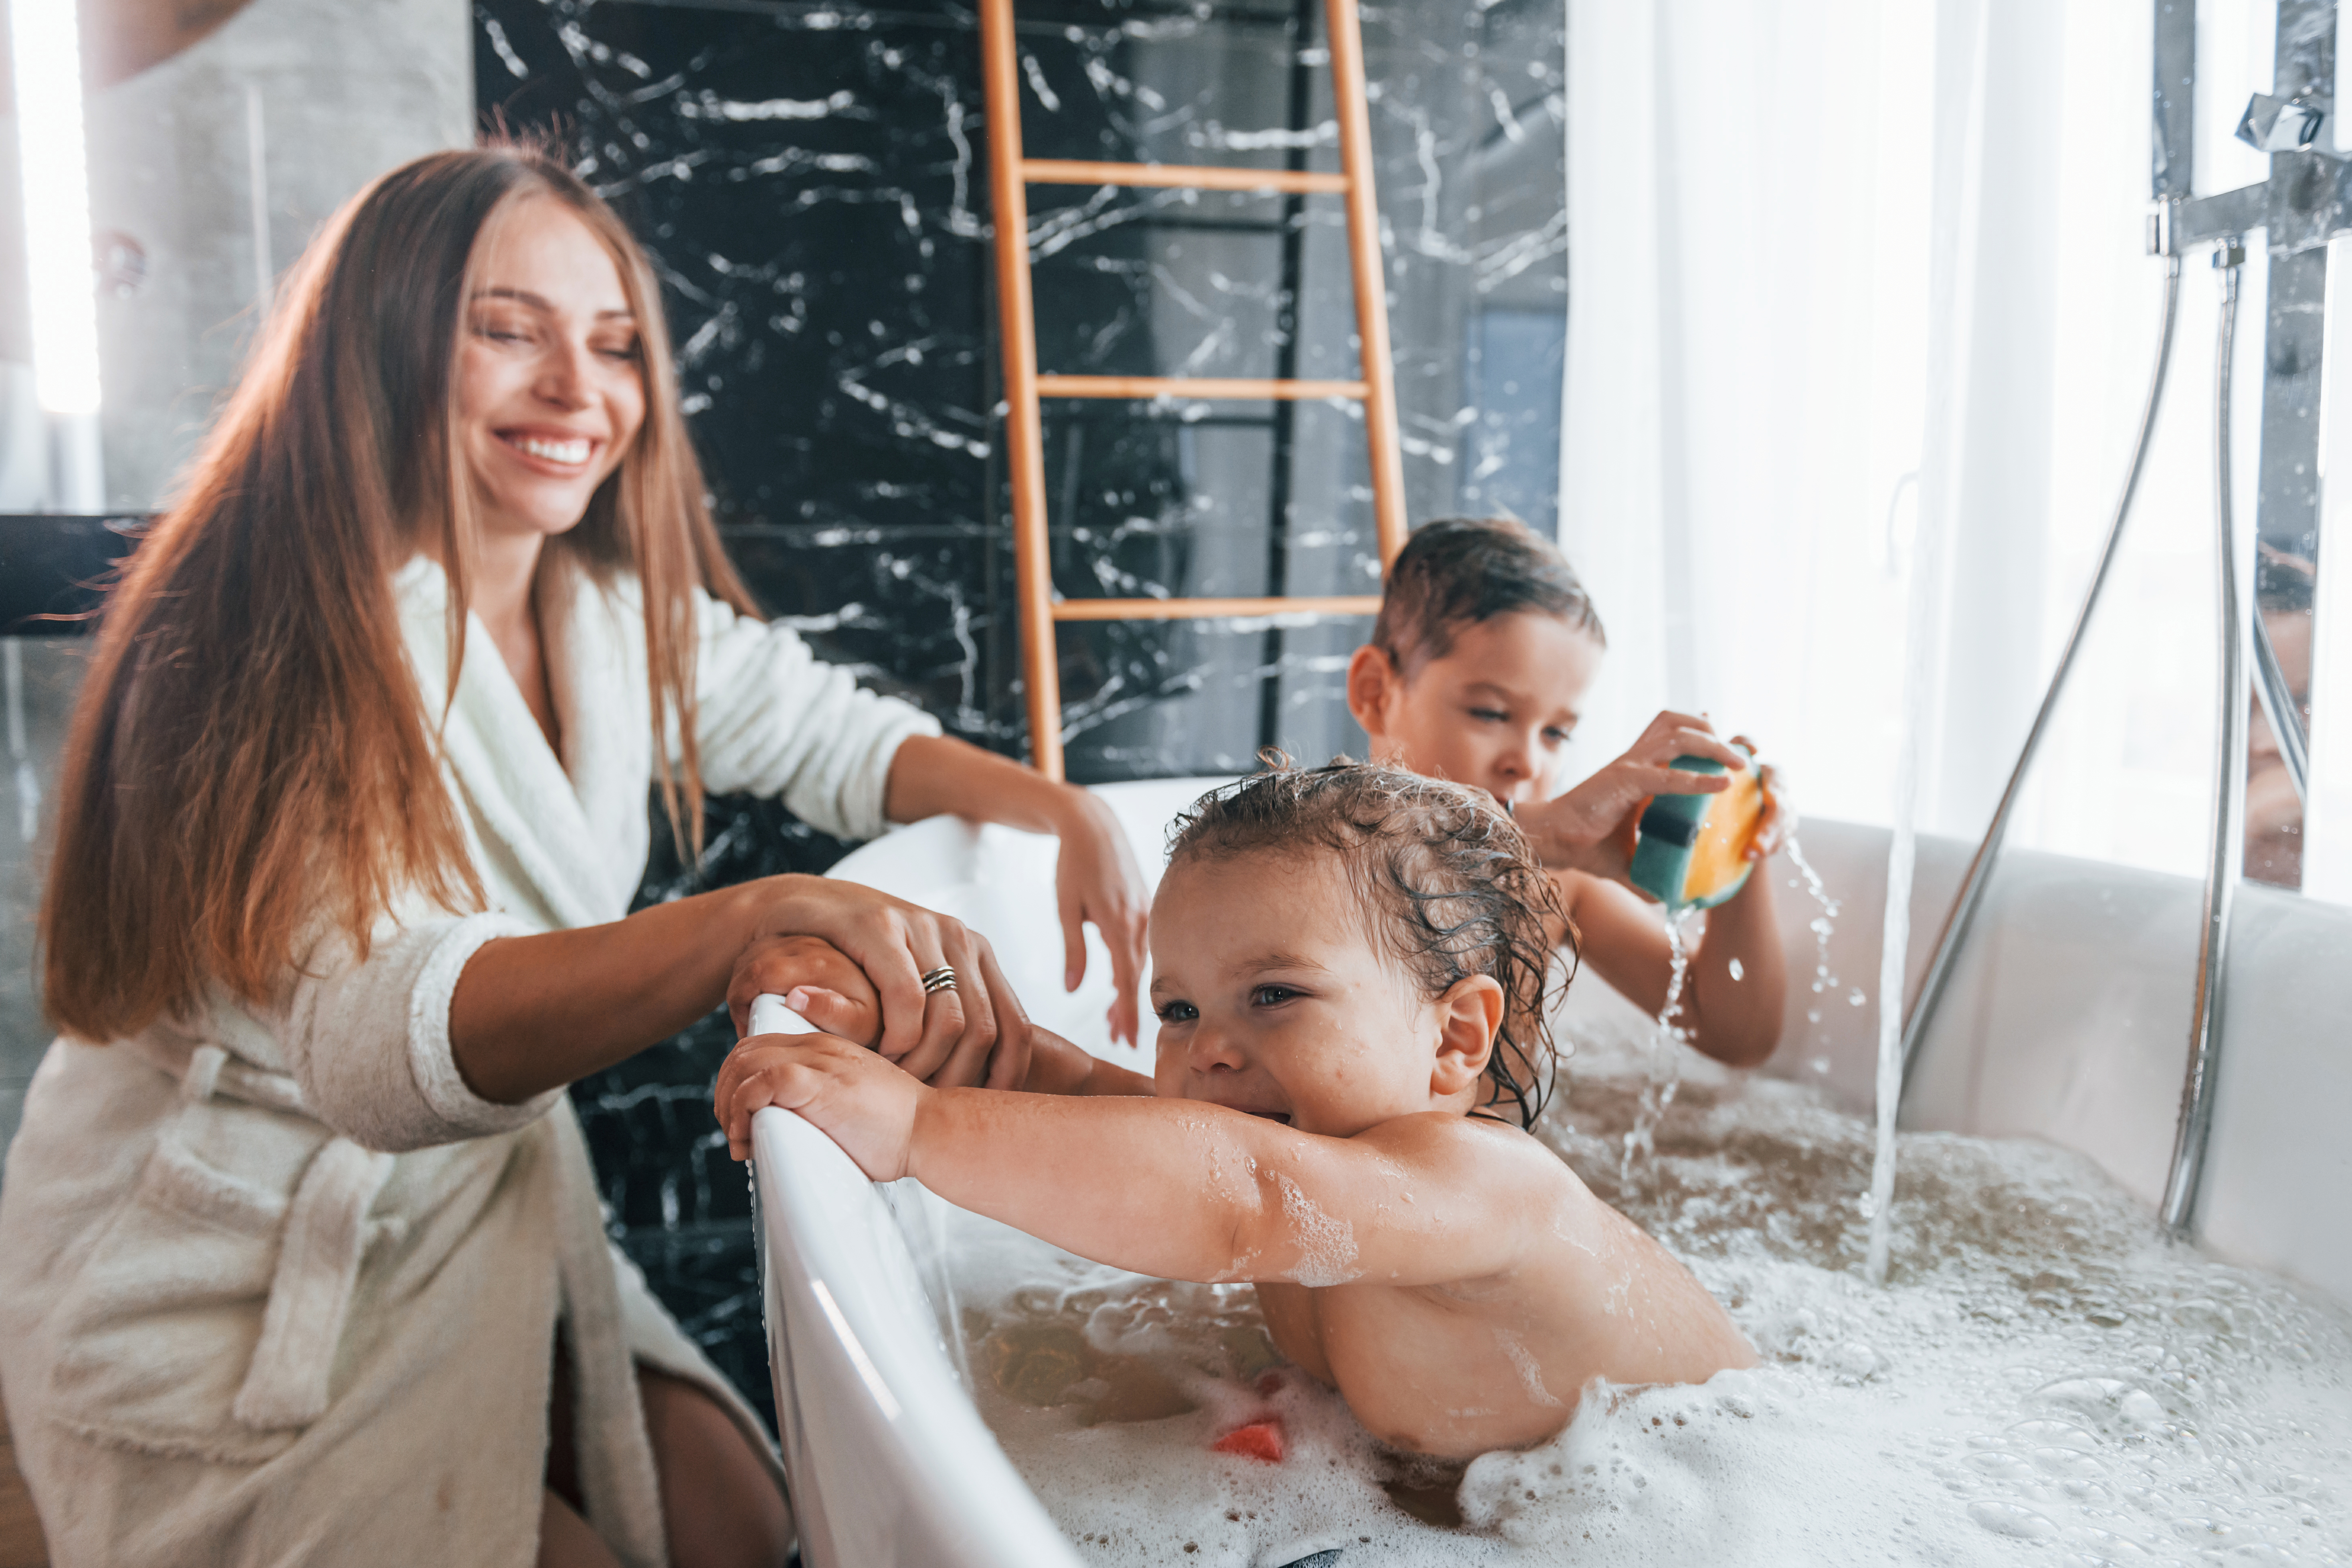 Mom Helps Son Bath married woman